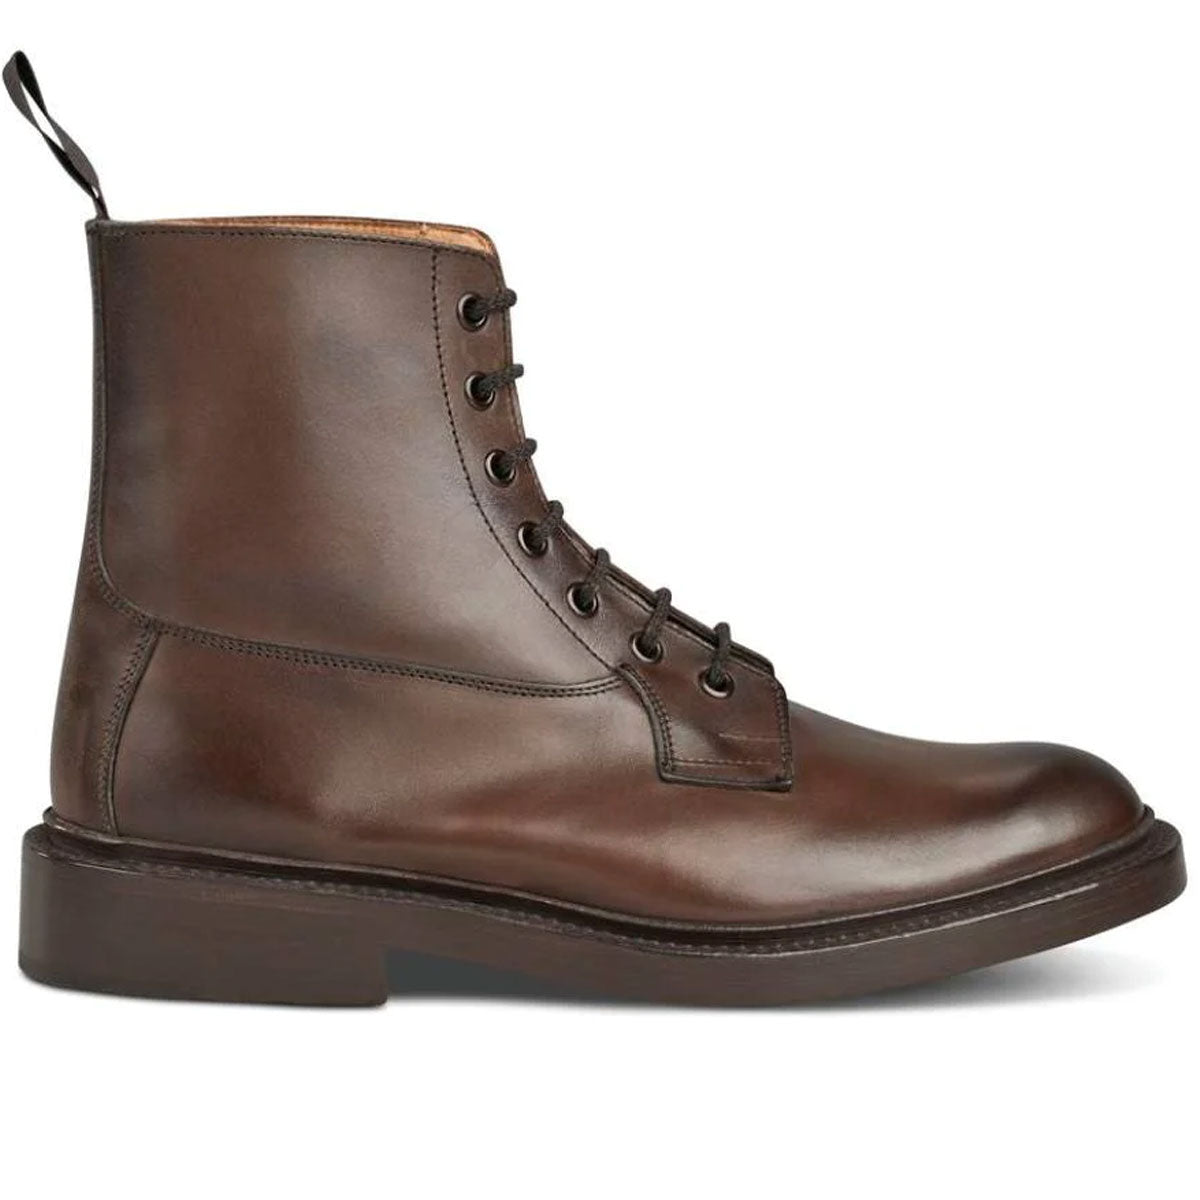 TRICKER'S Burford Boots - Mens Dainite or Leather Sole - Espresso